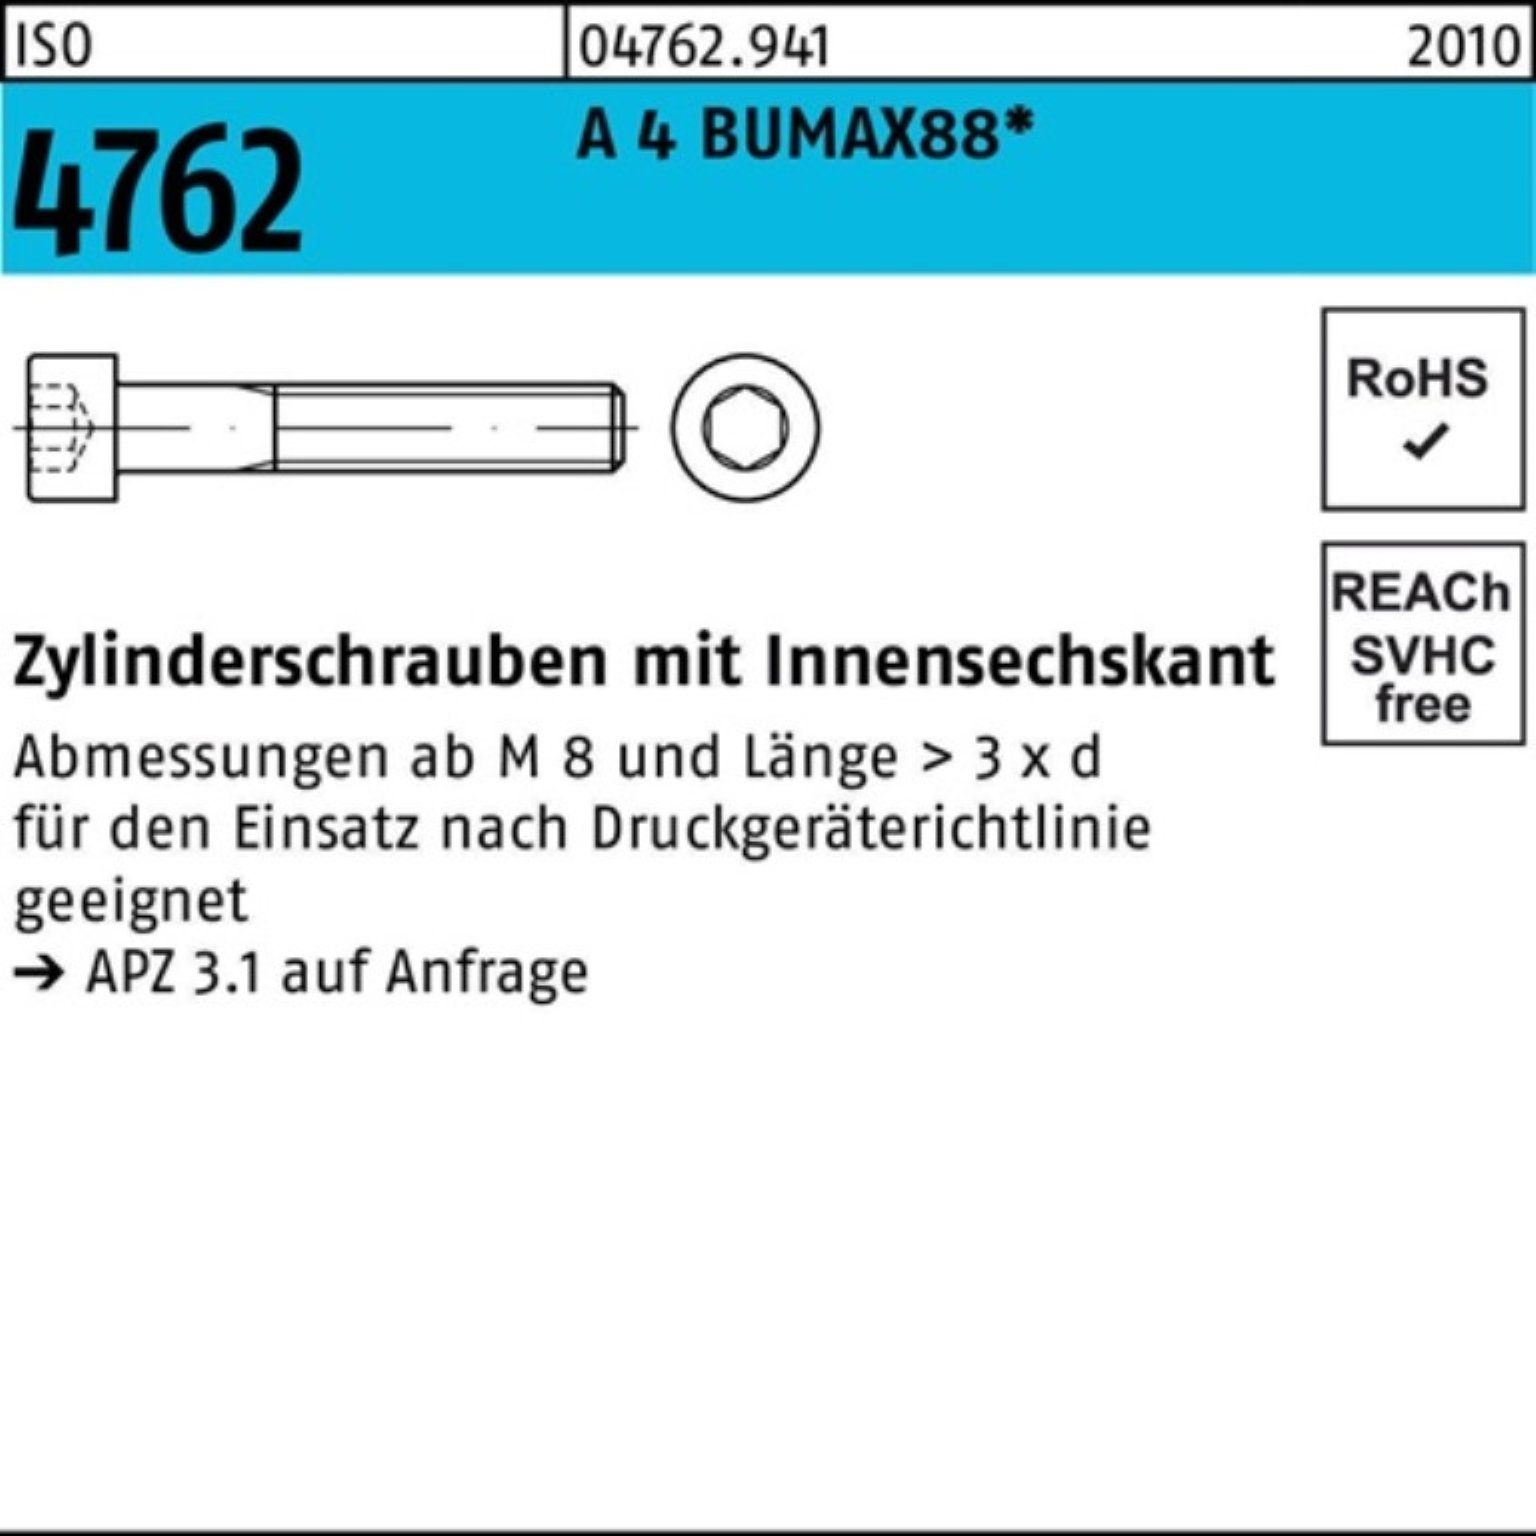 Bufab Zylinderschraube 100er Pack Zylinderschraube ISO 4762 Innen-6kt M12x 60 A 4 BUMAX88 25